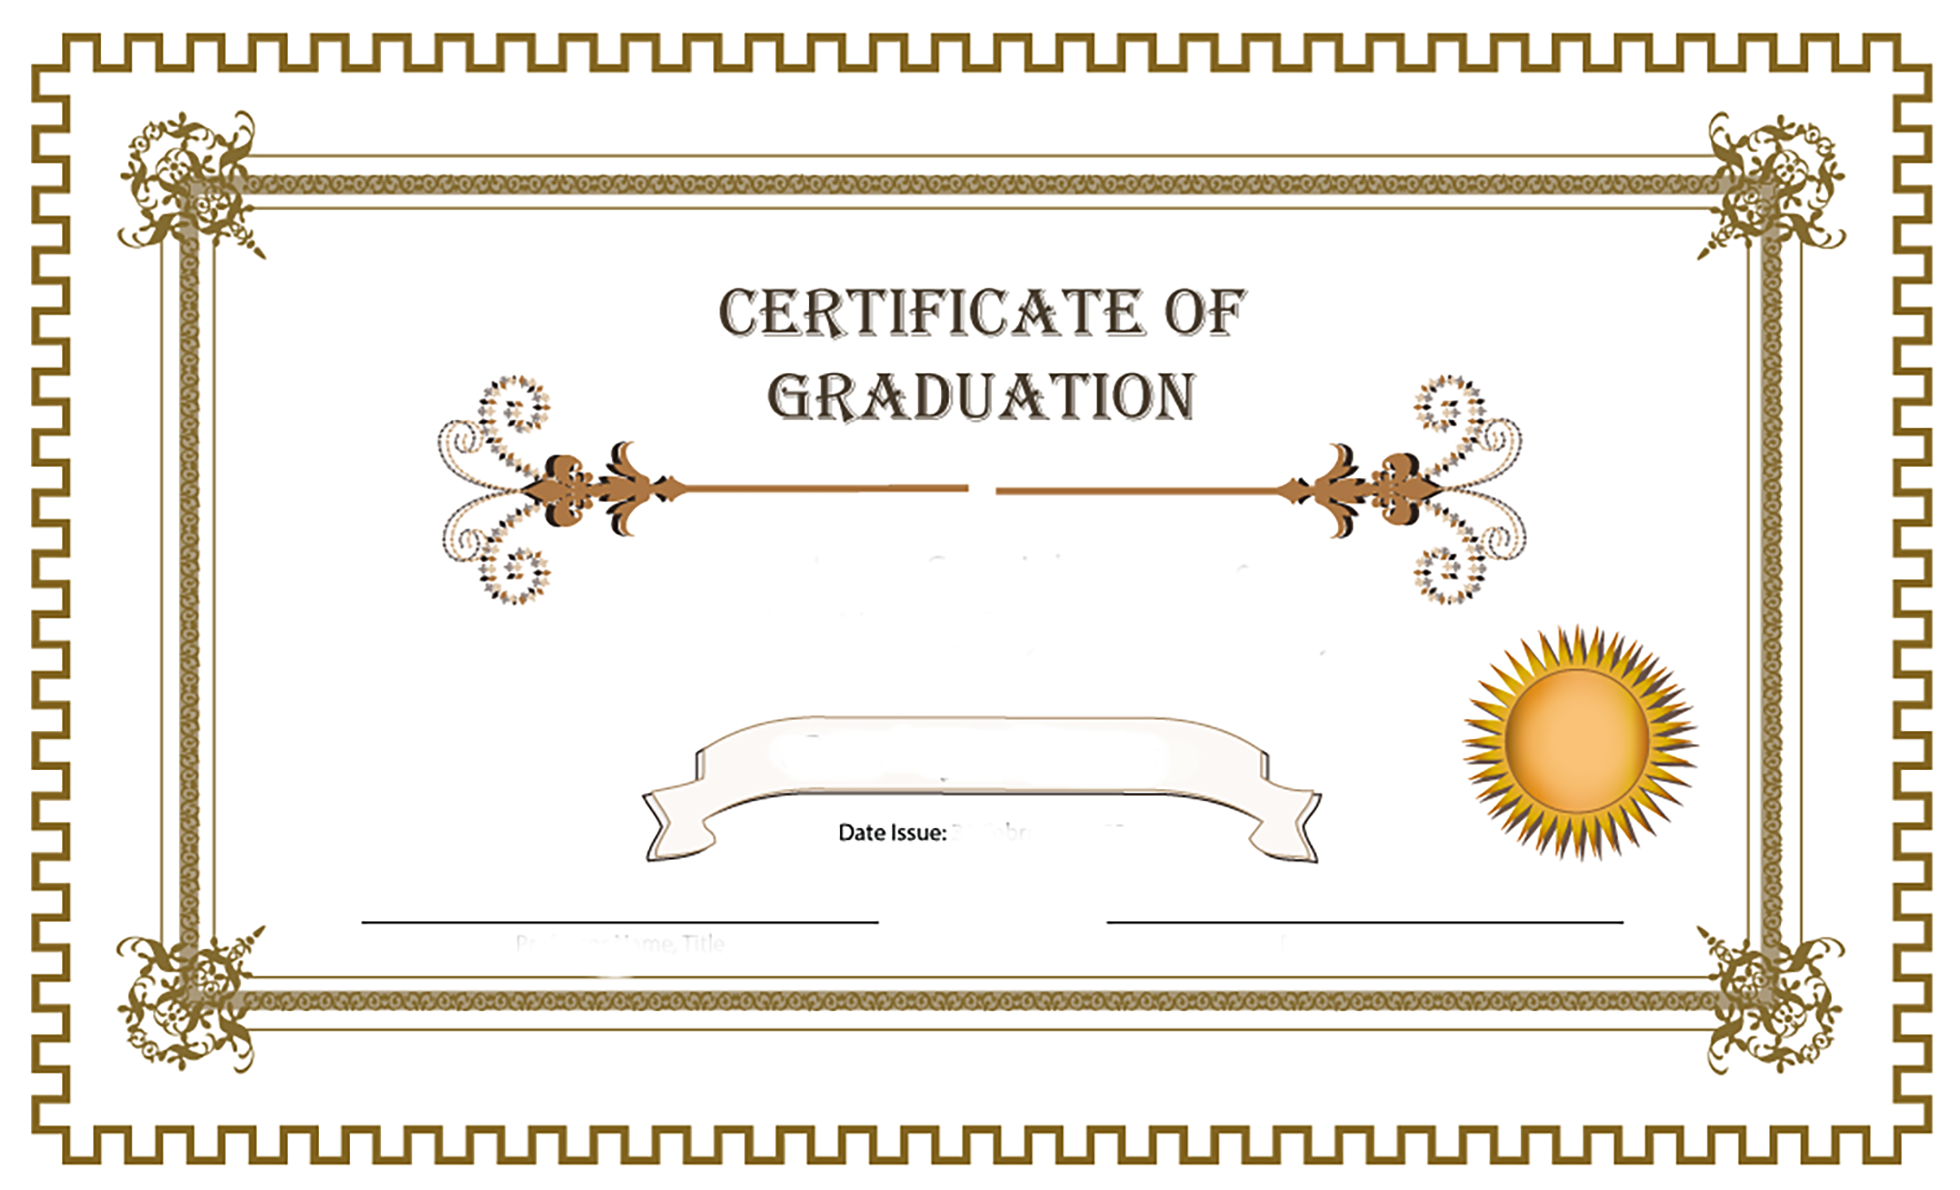 7 Ways You Can Use a Fake Diploma